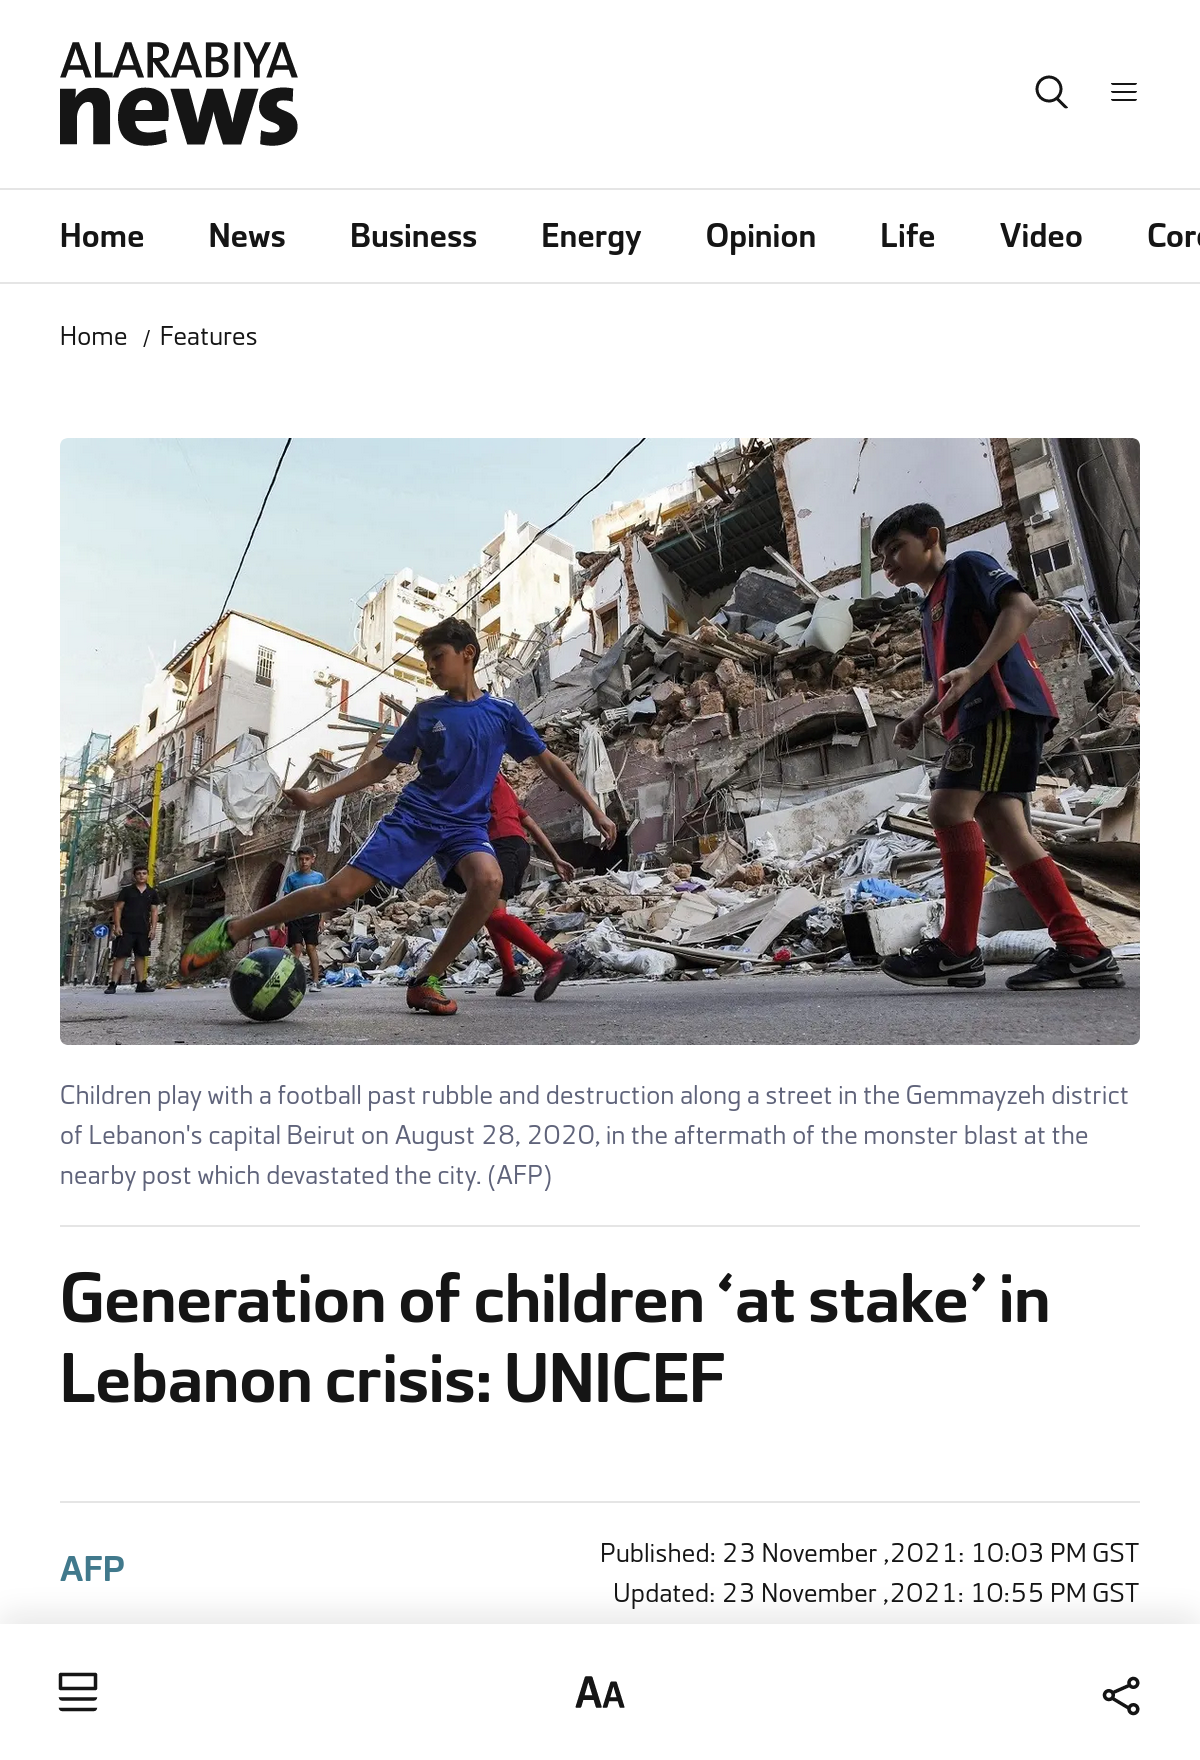 Al Arabiya News - Generation of Children at stake in Lebanon Crisis